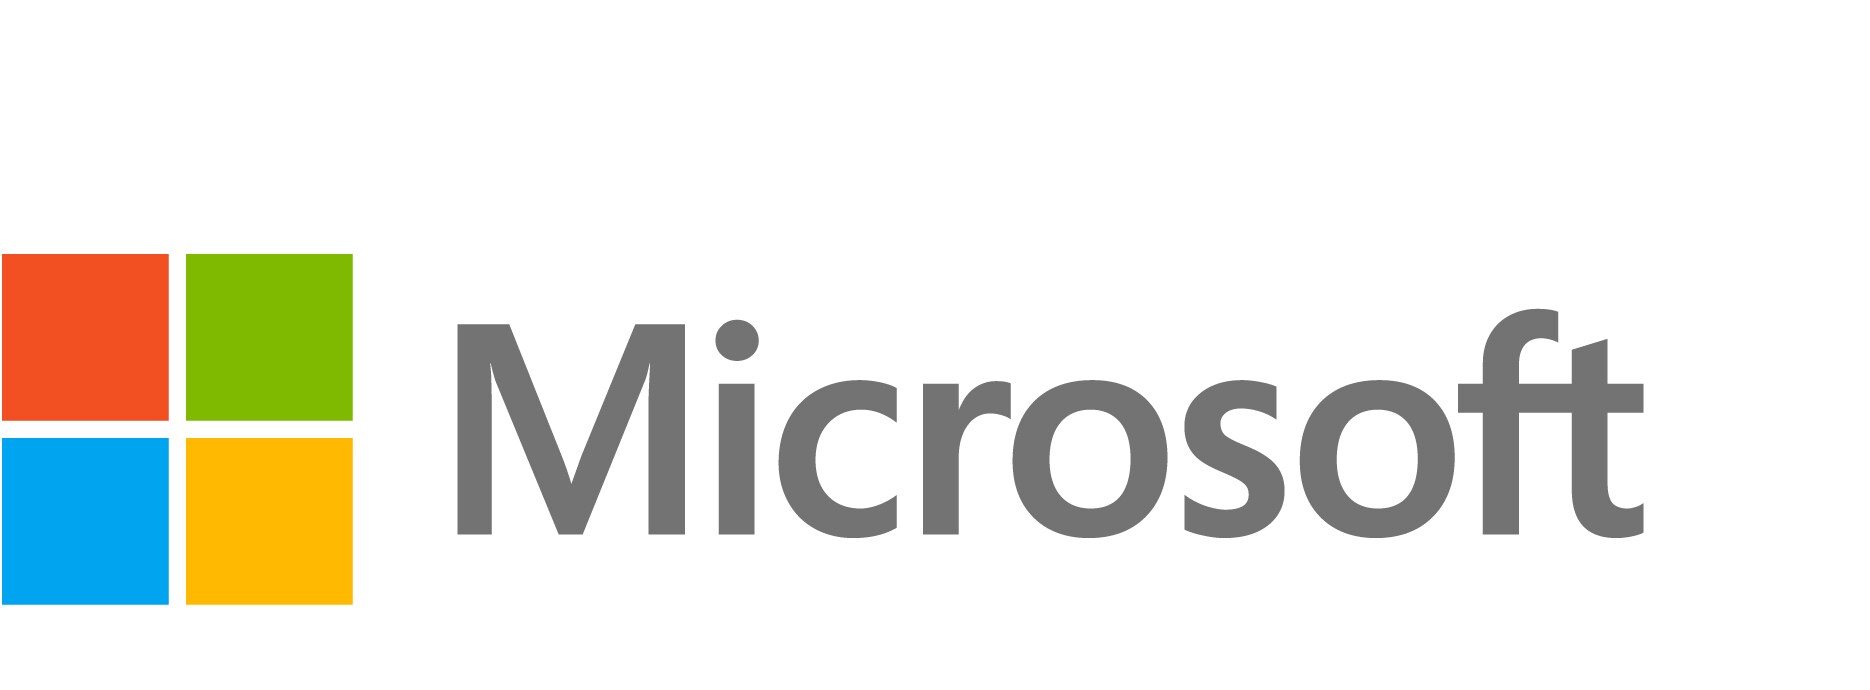 Microsoft Dynamics 365 Operations Sandbox Tier 4: Standard Performance Testing - subscription license (1 month) - 1